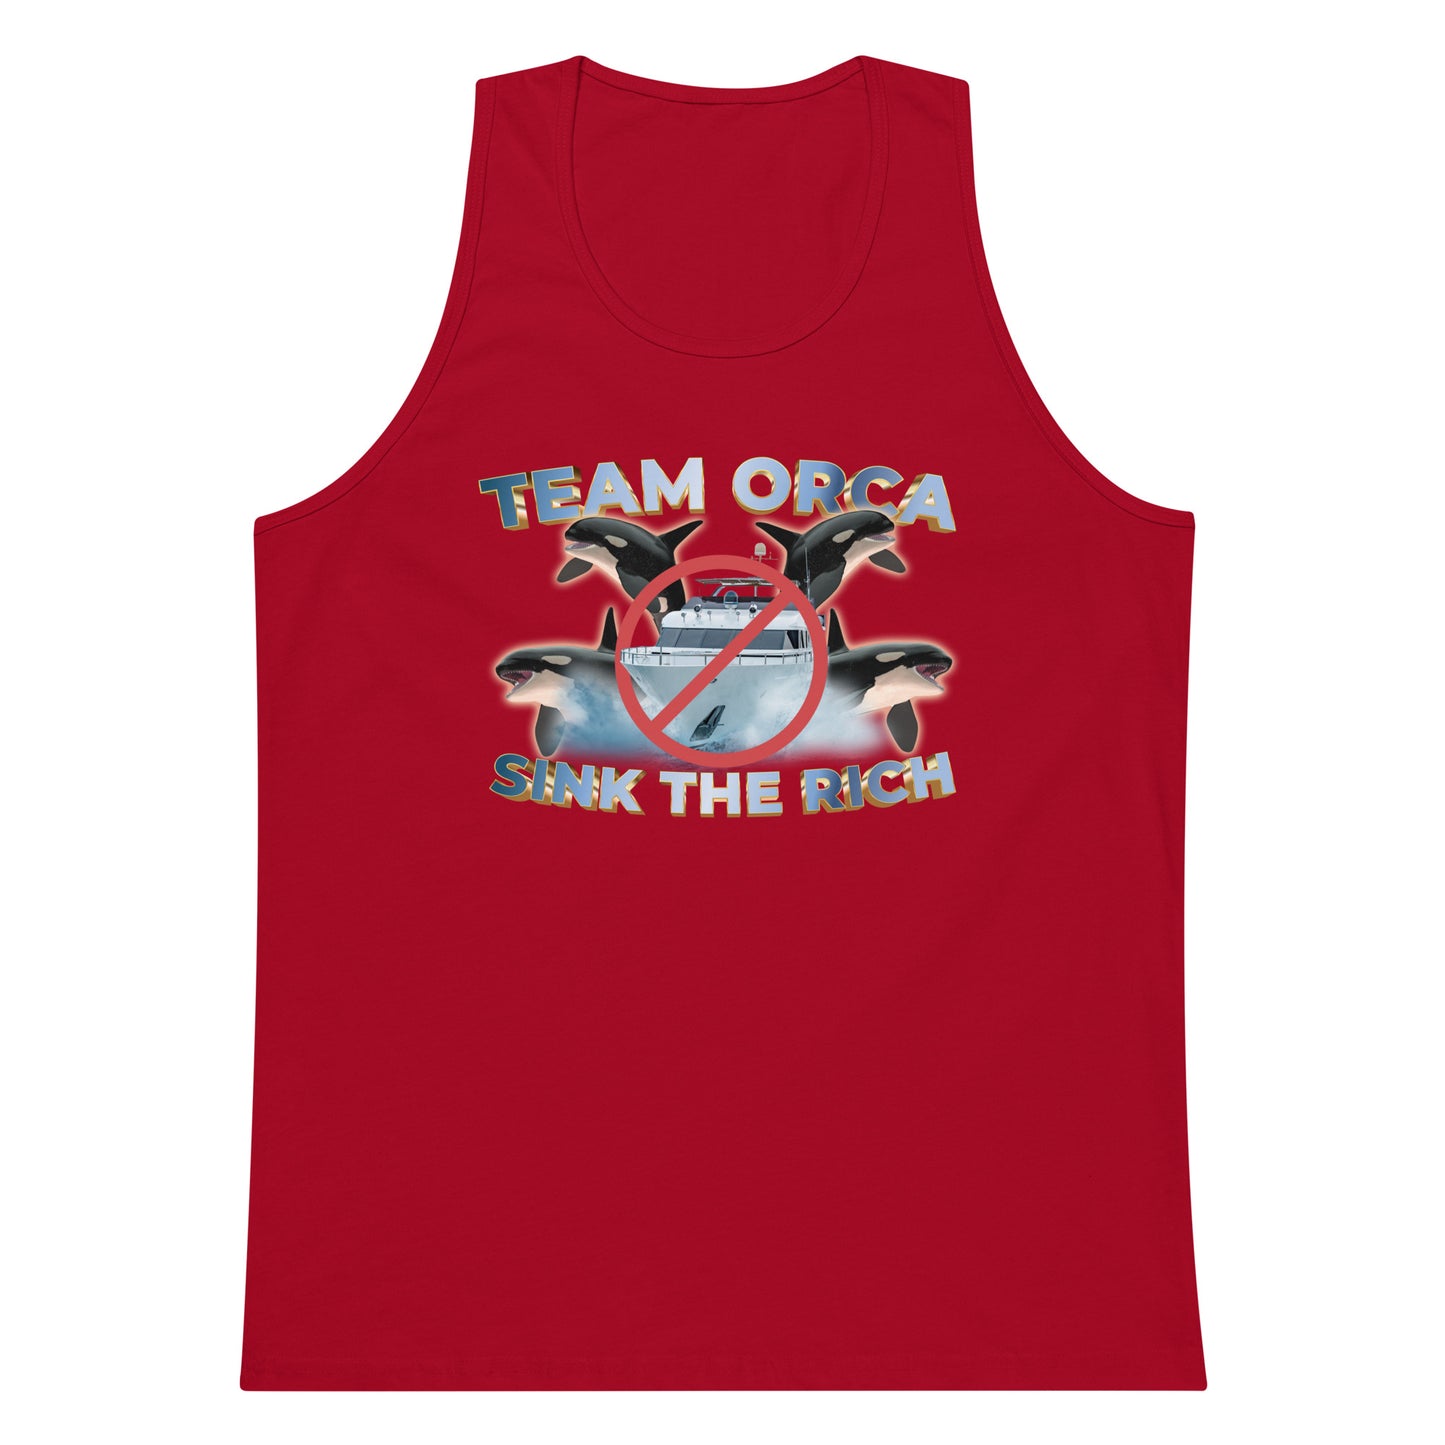 Team Orca Sink the Rich tank top